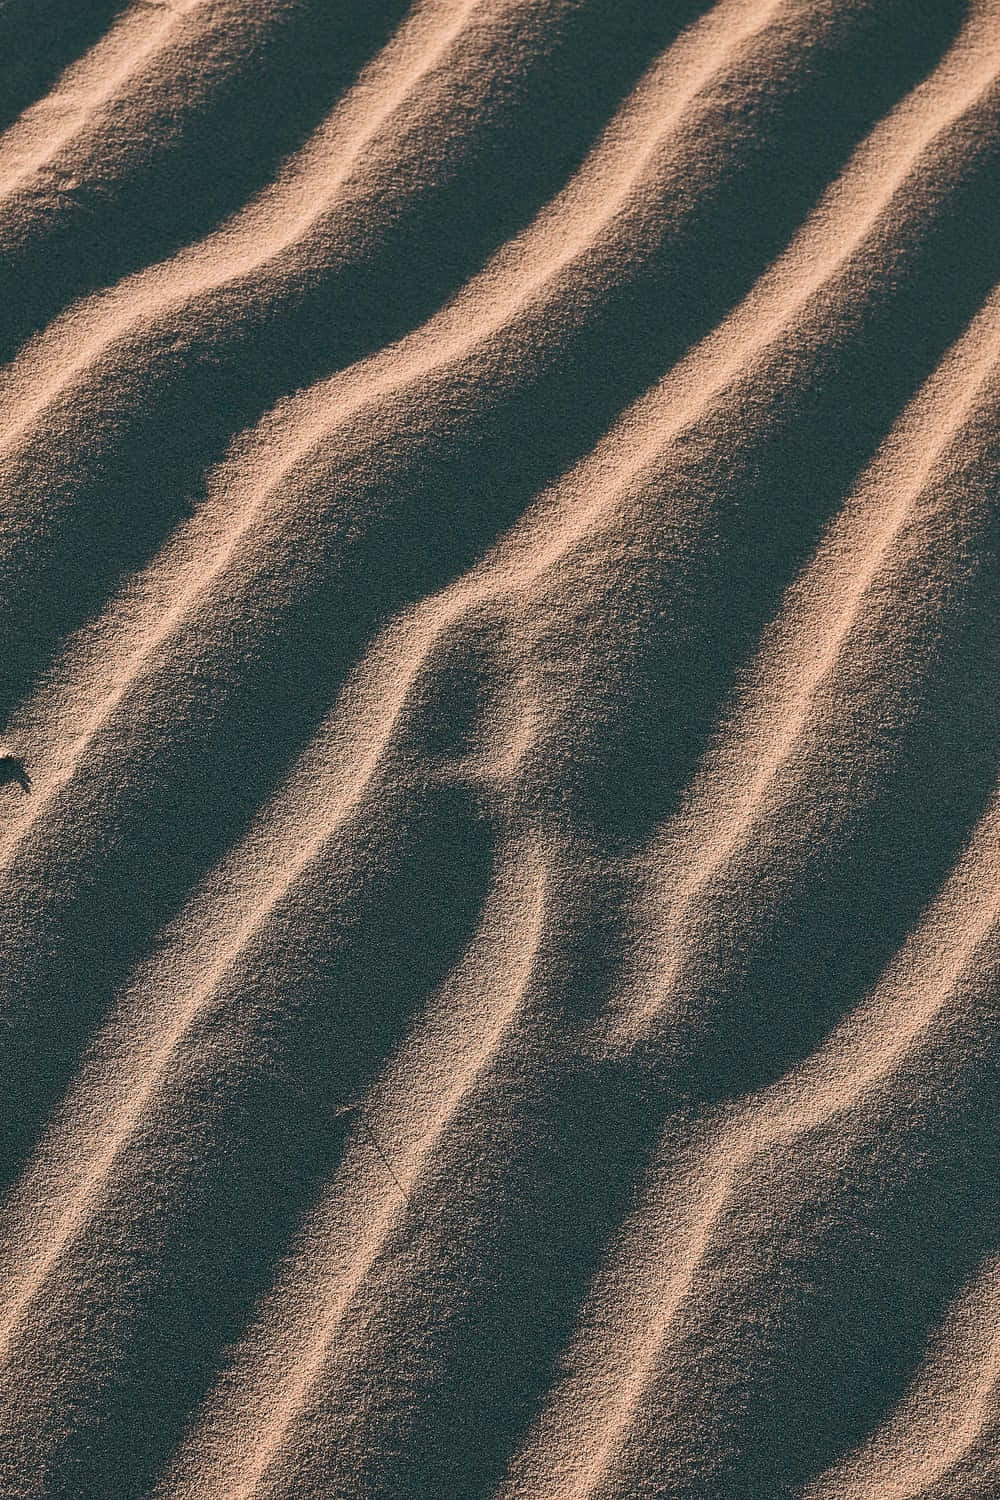 Desert Sand Wave Original Iphone 5s Wallpaper